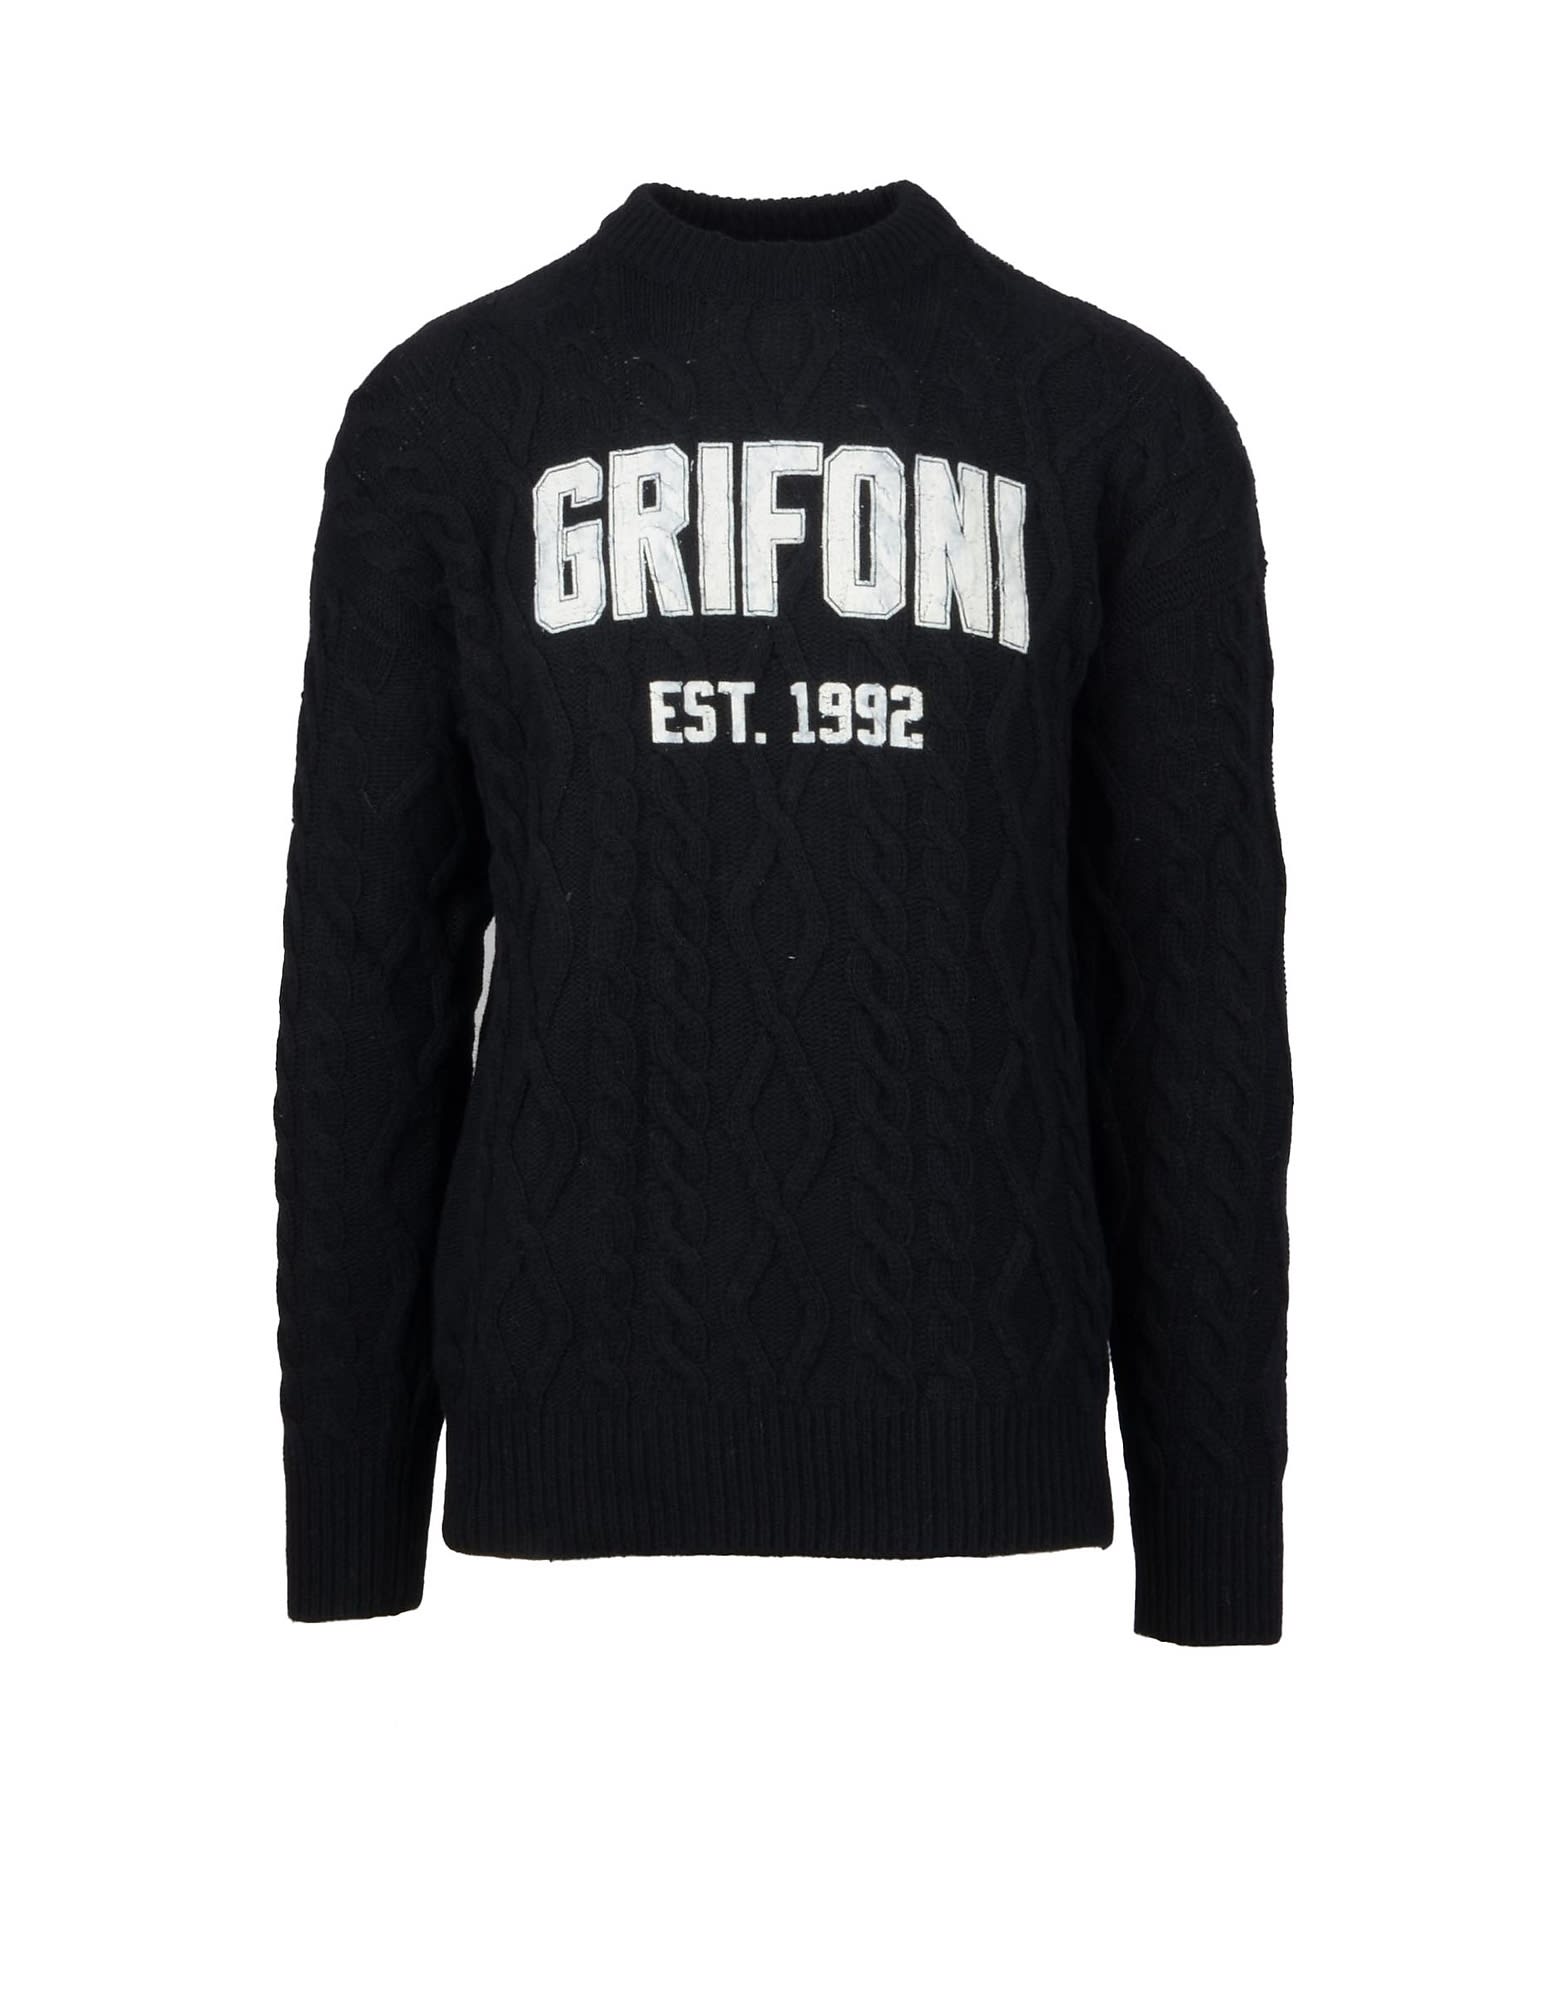 Mauro Grifoni Mens Black Sweater